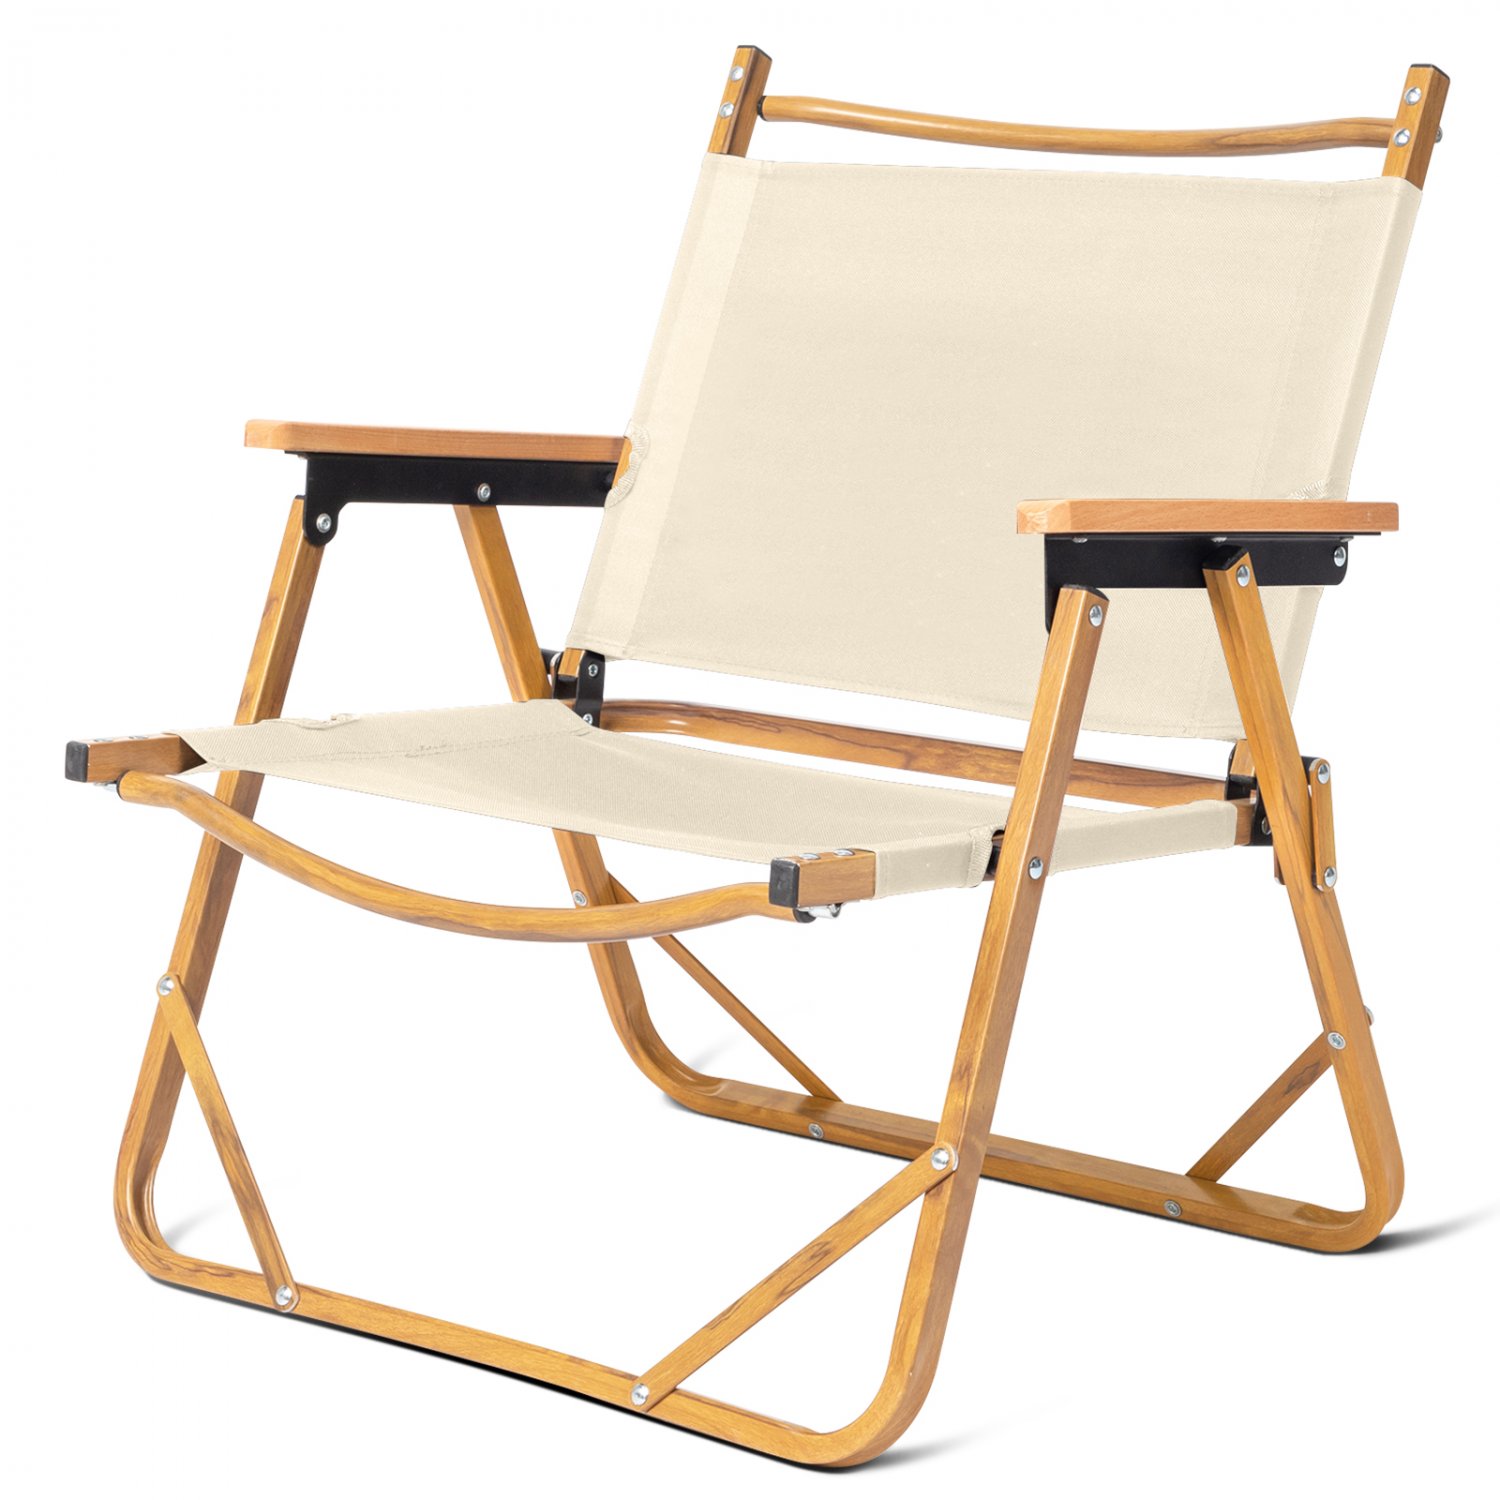 Aluminum Frame Imitation Wood Grain Spray Paint Camping Chair Khaki